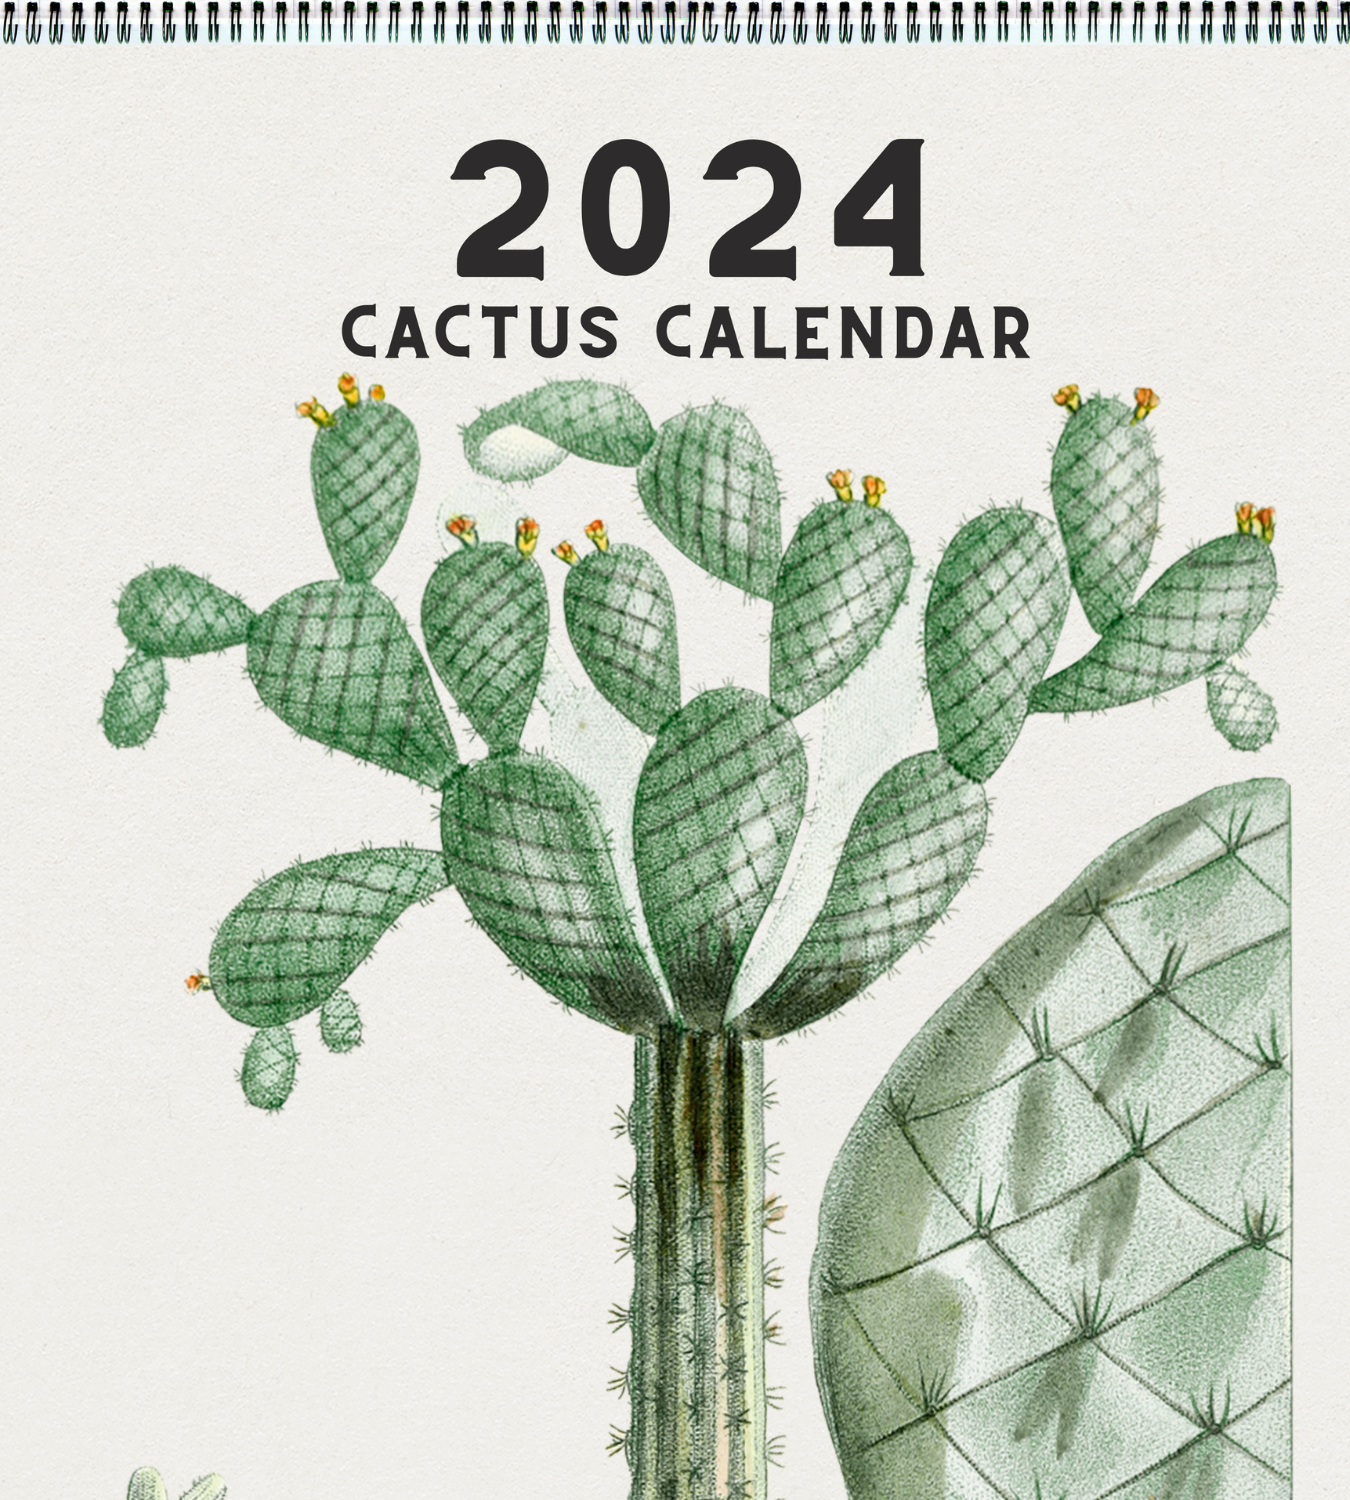 2024 Cactus Calendar